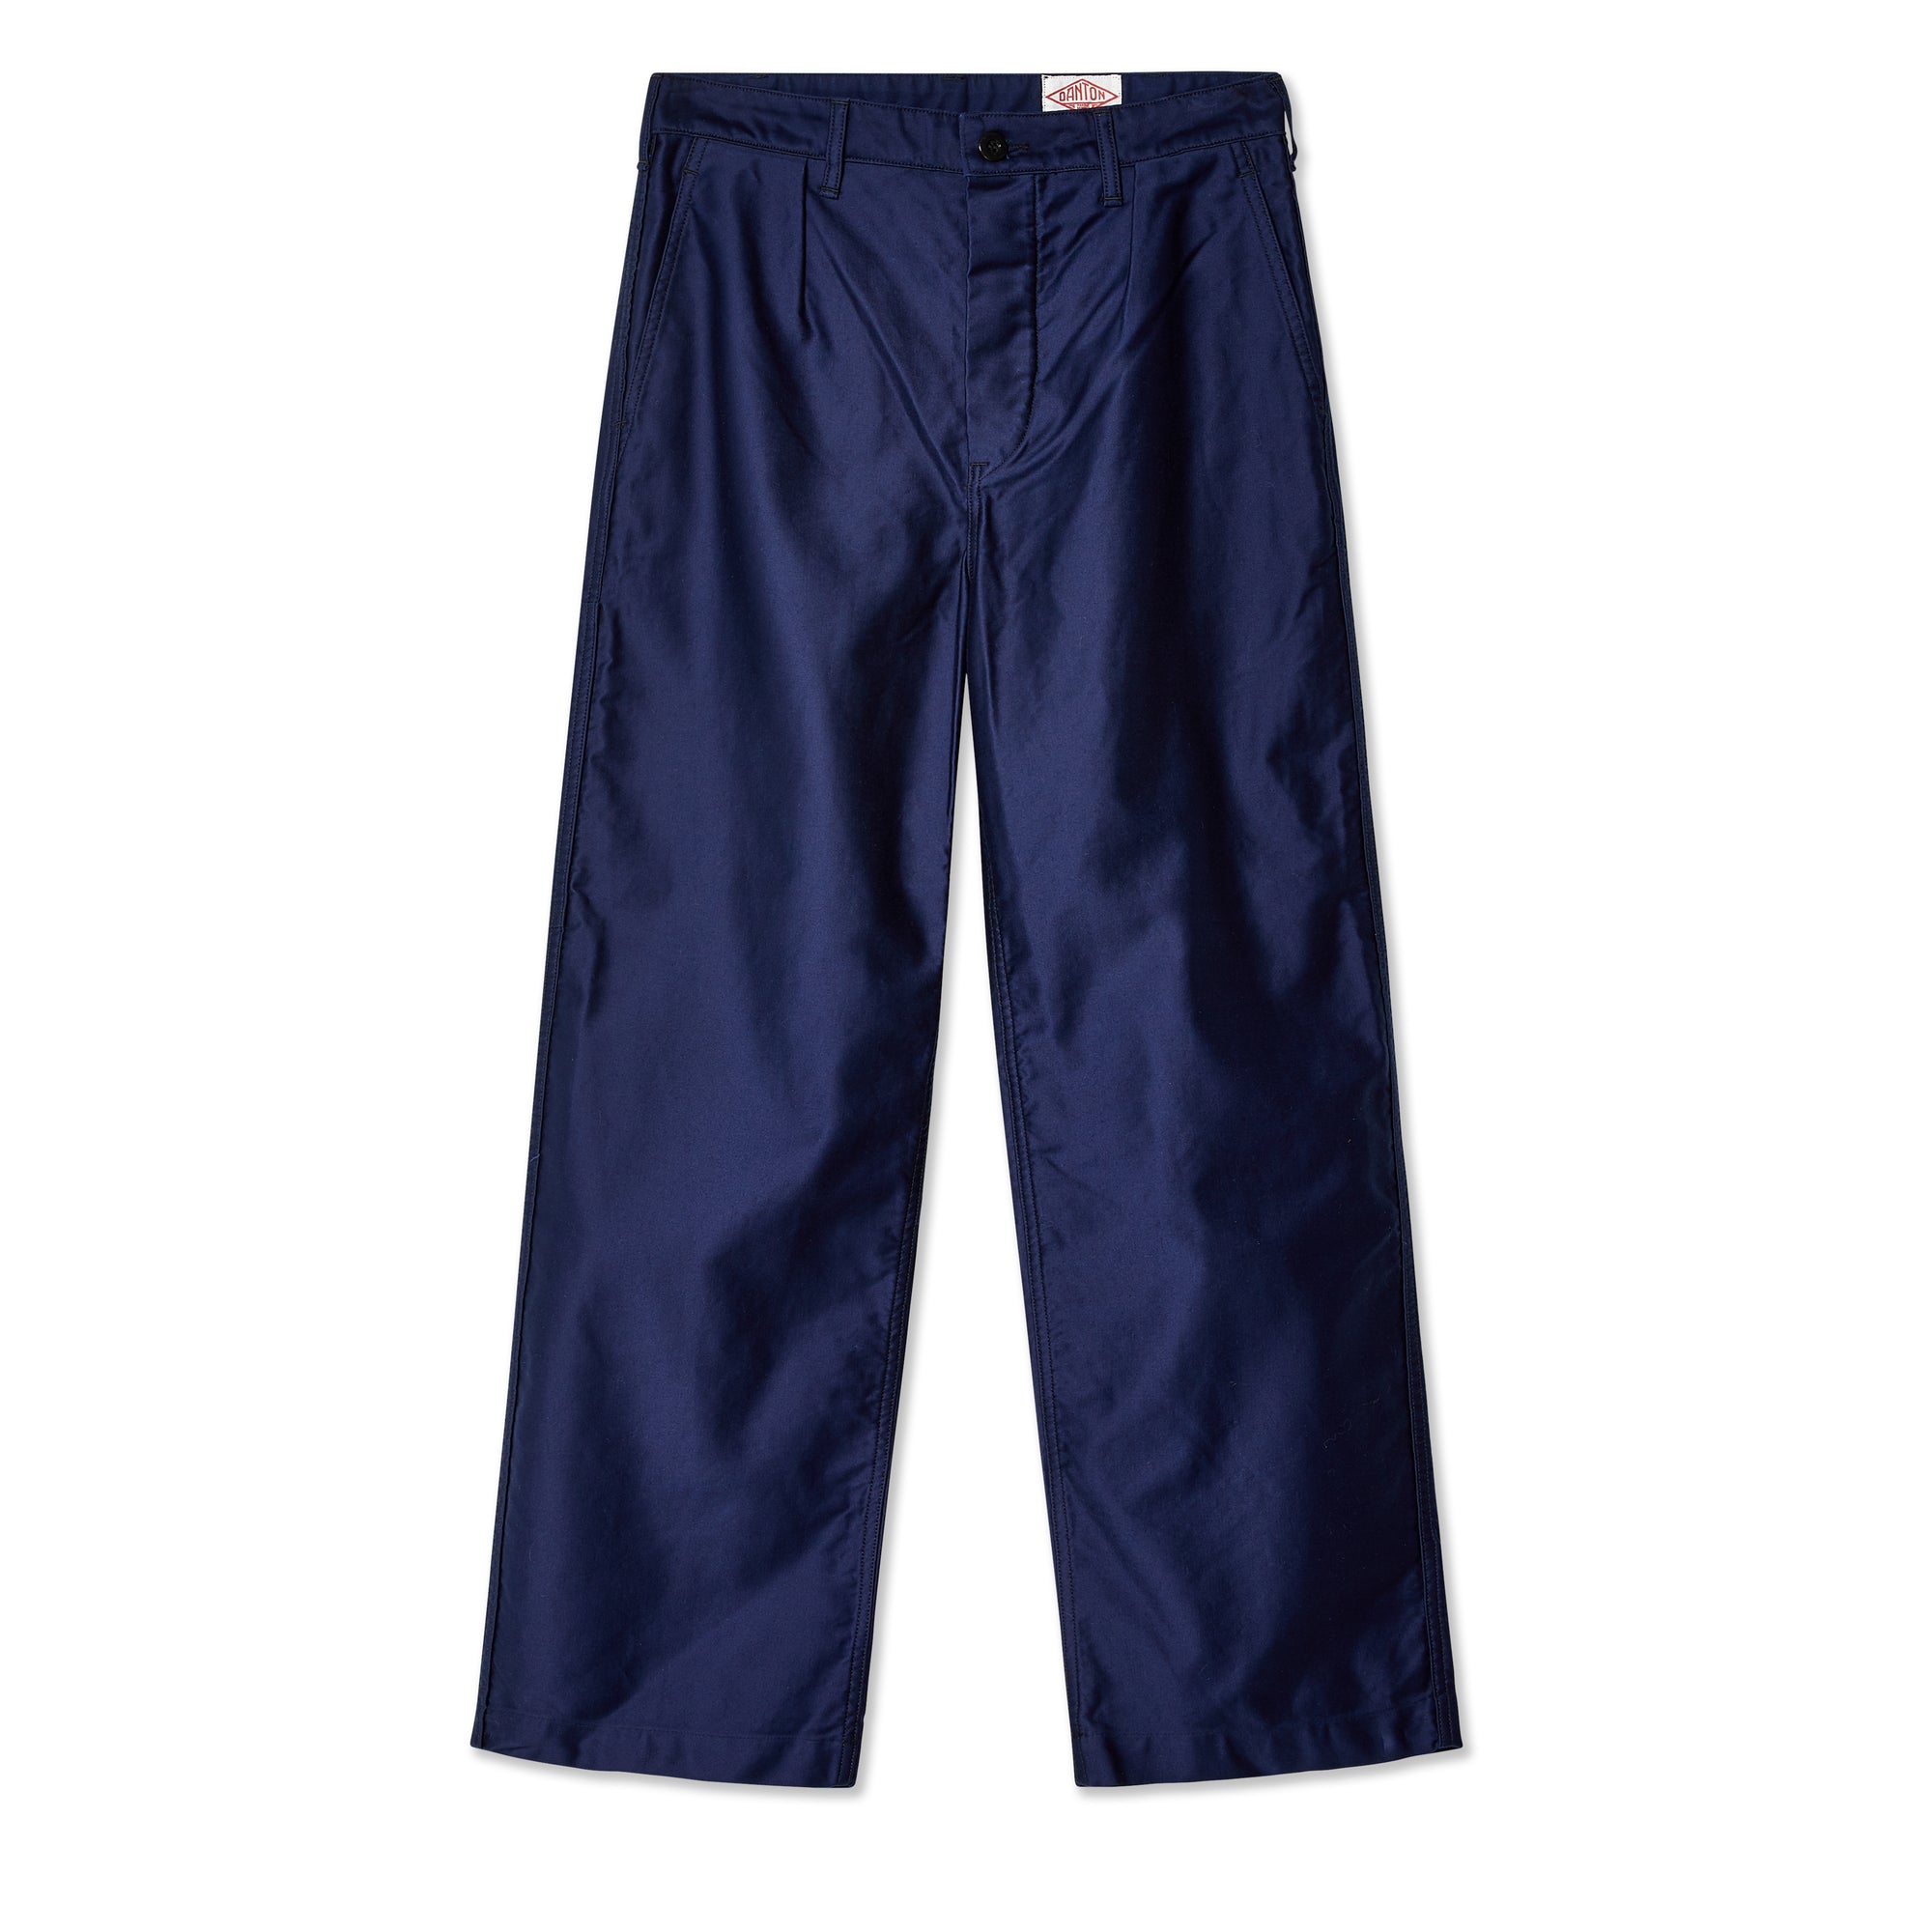 Danton - Men's Work Pants - (Blue) view 1